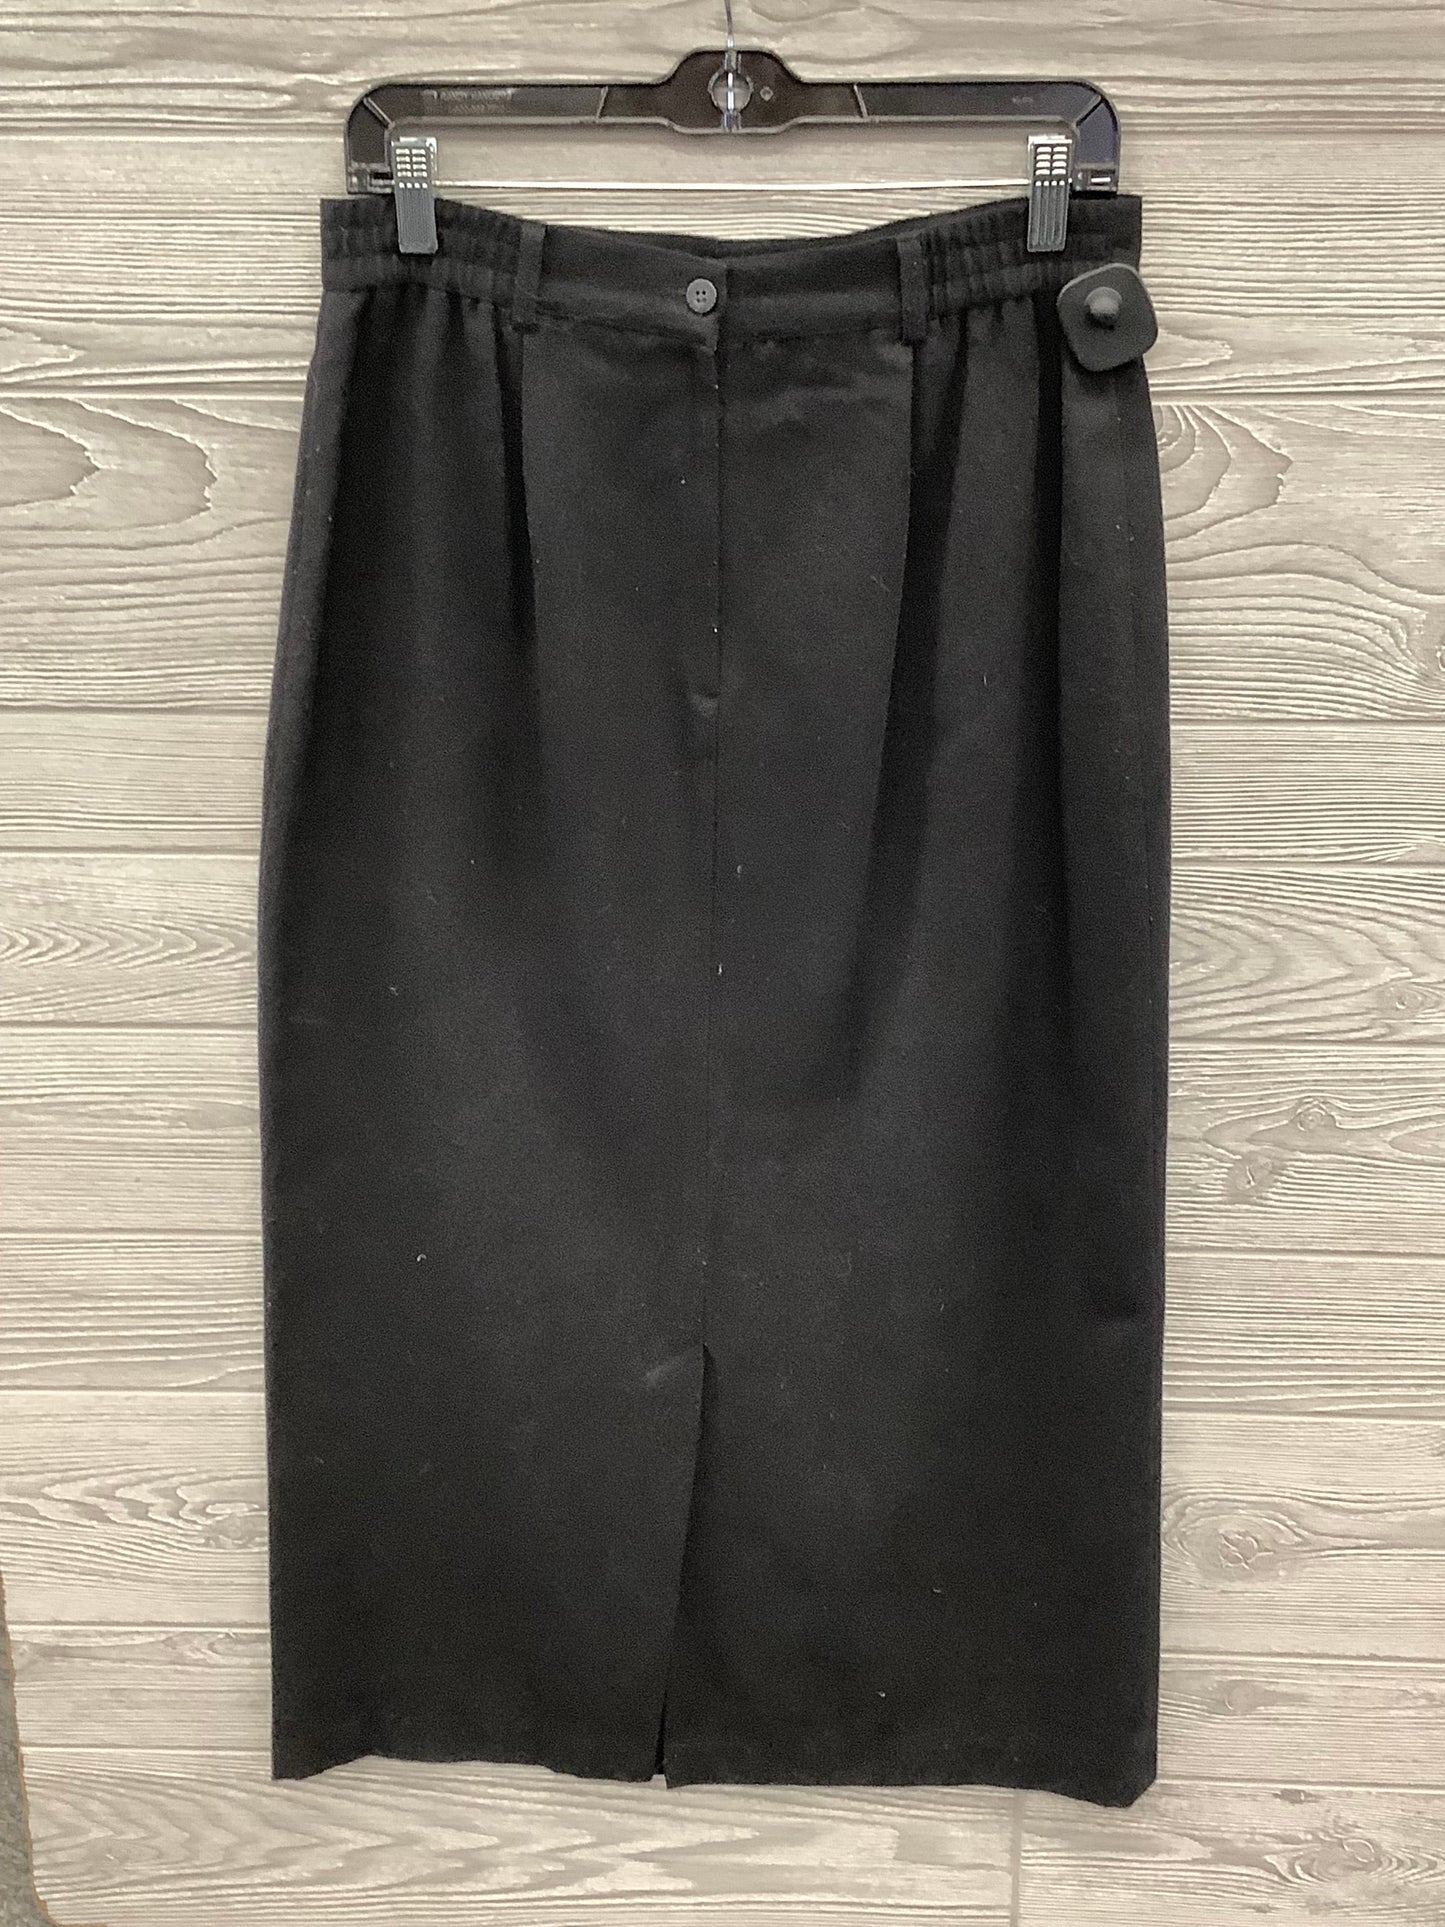 Skirt Maxi By Sag Harbor  Size: 12